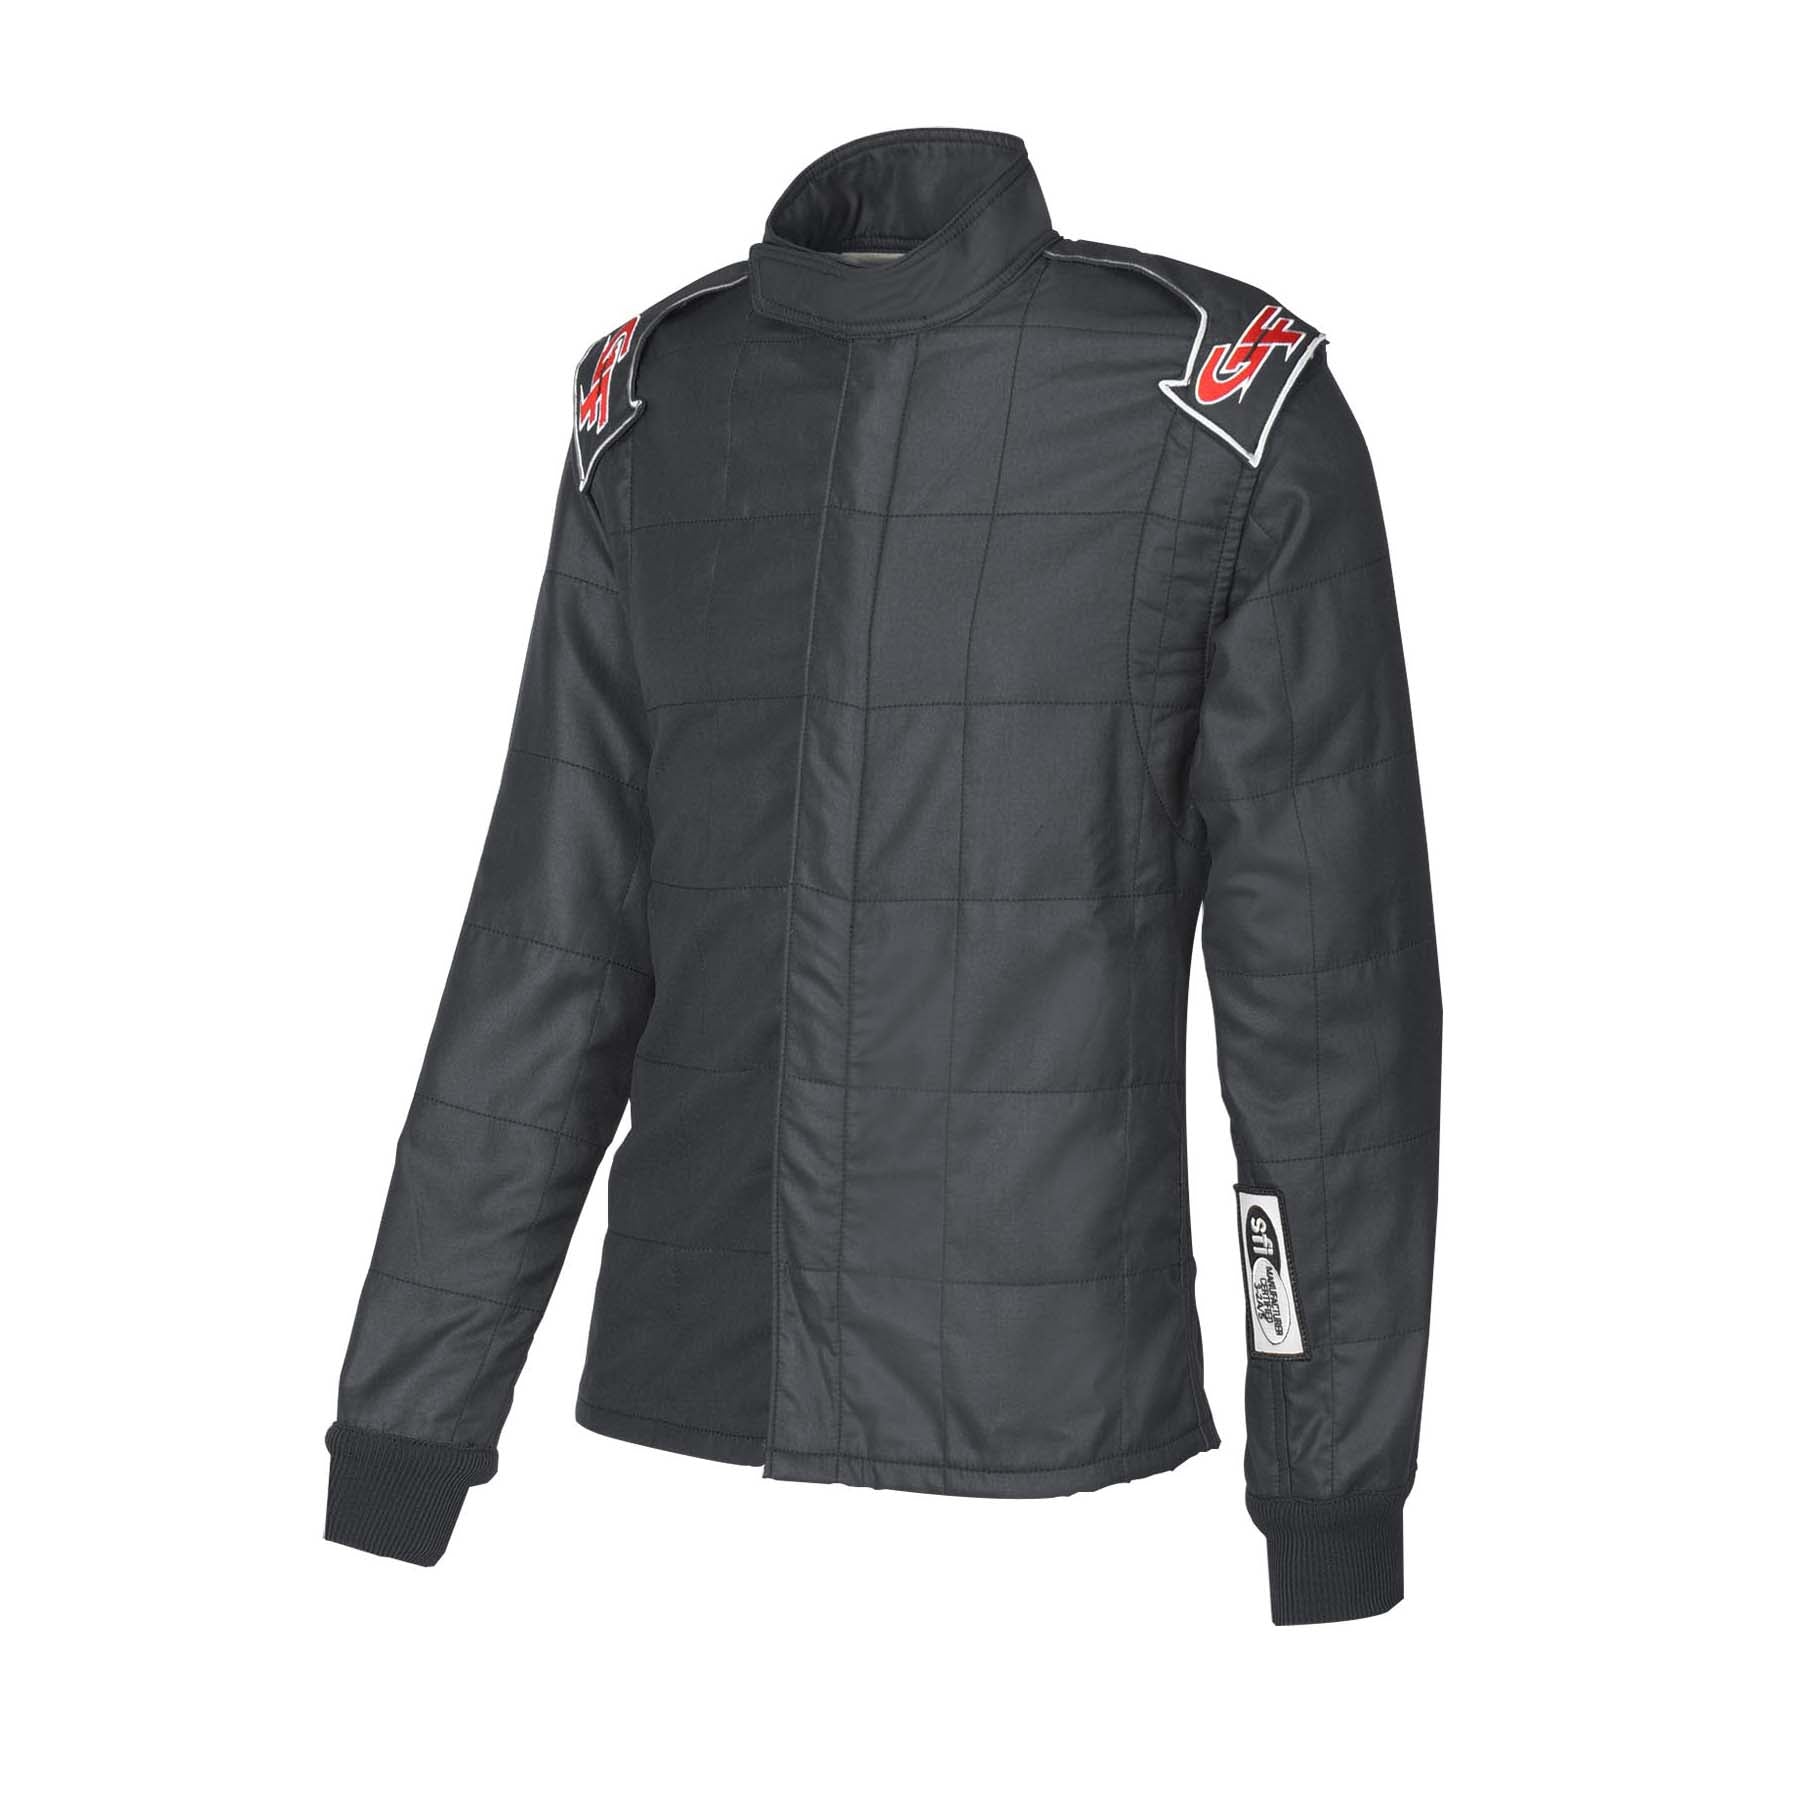 G-Force G-Limit Racing Jacket - Black